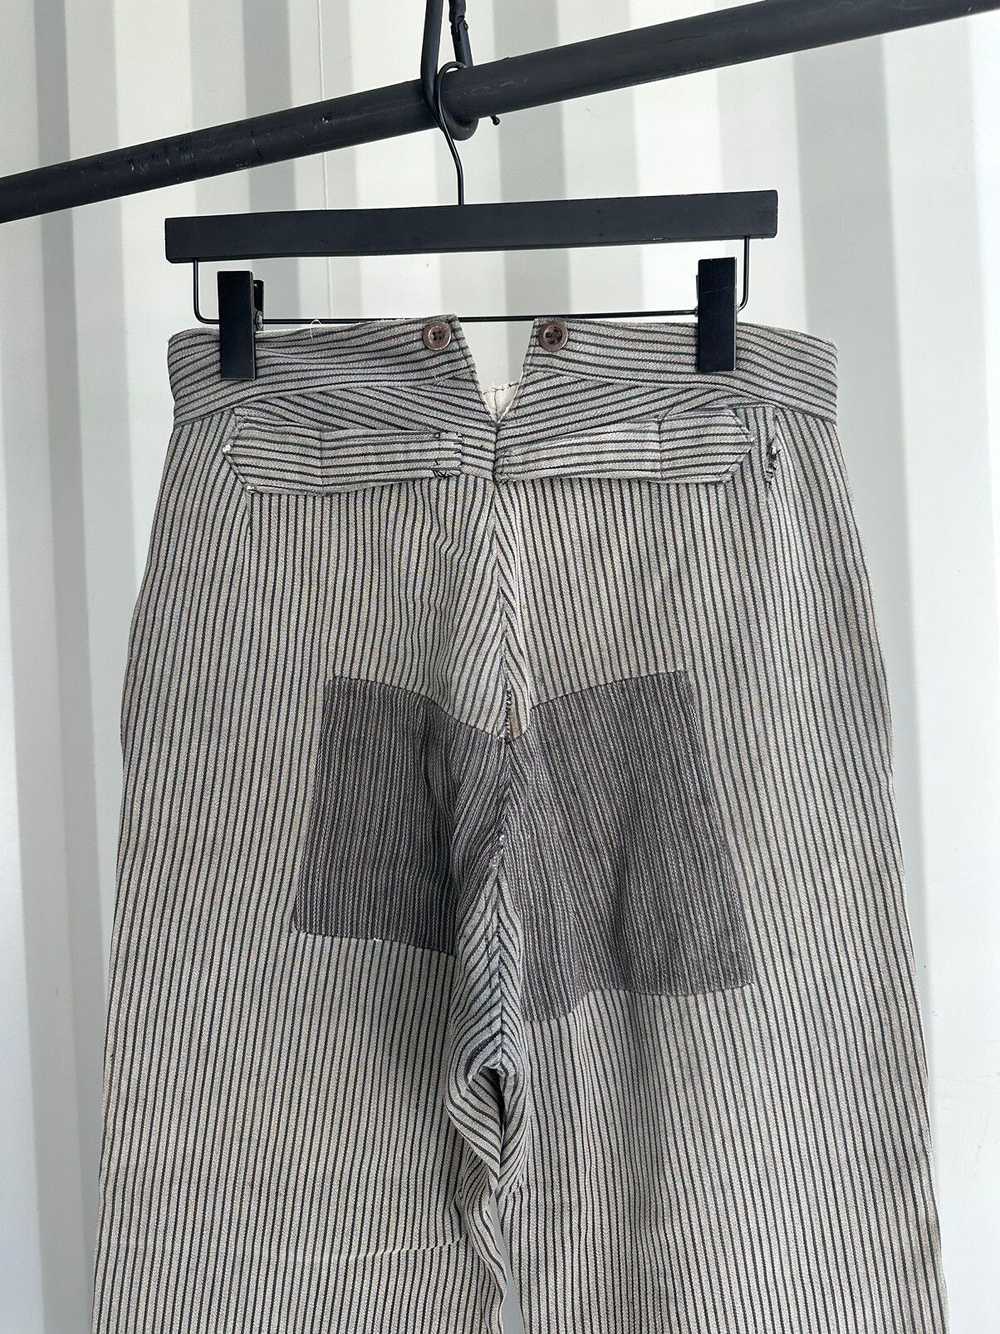 Vintage 20’s French Workwear Chore Pants - image 6